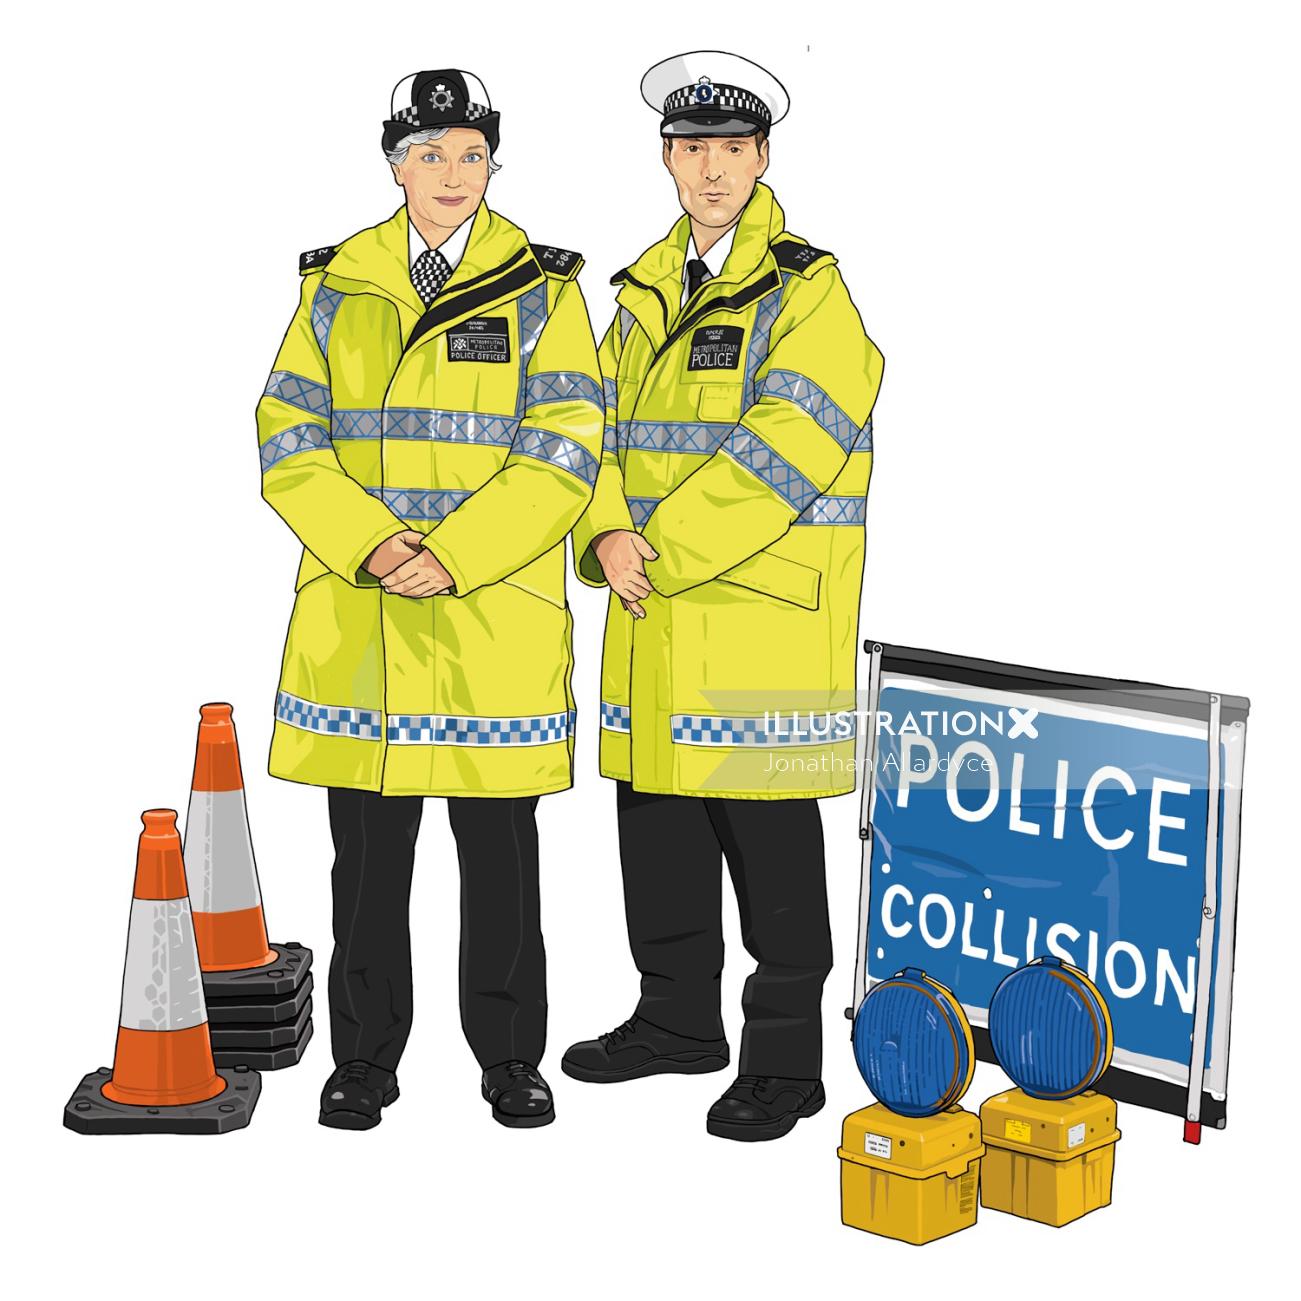 Illustration of traffic police officers